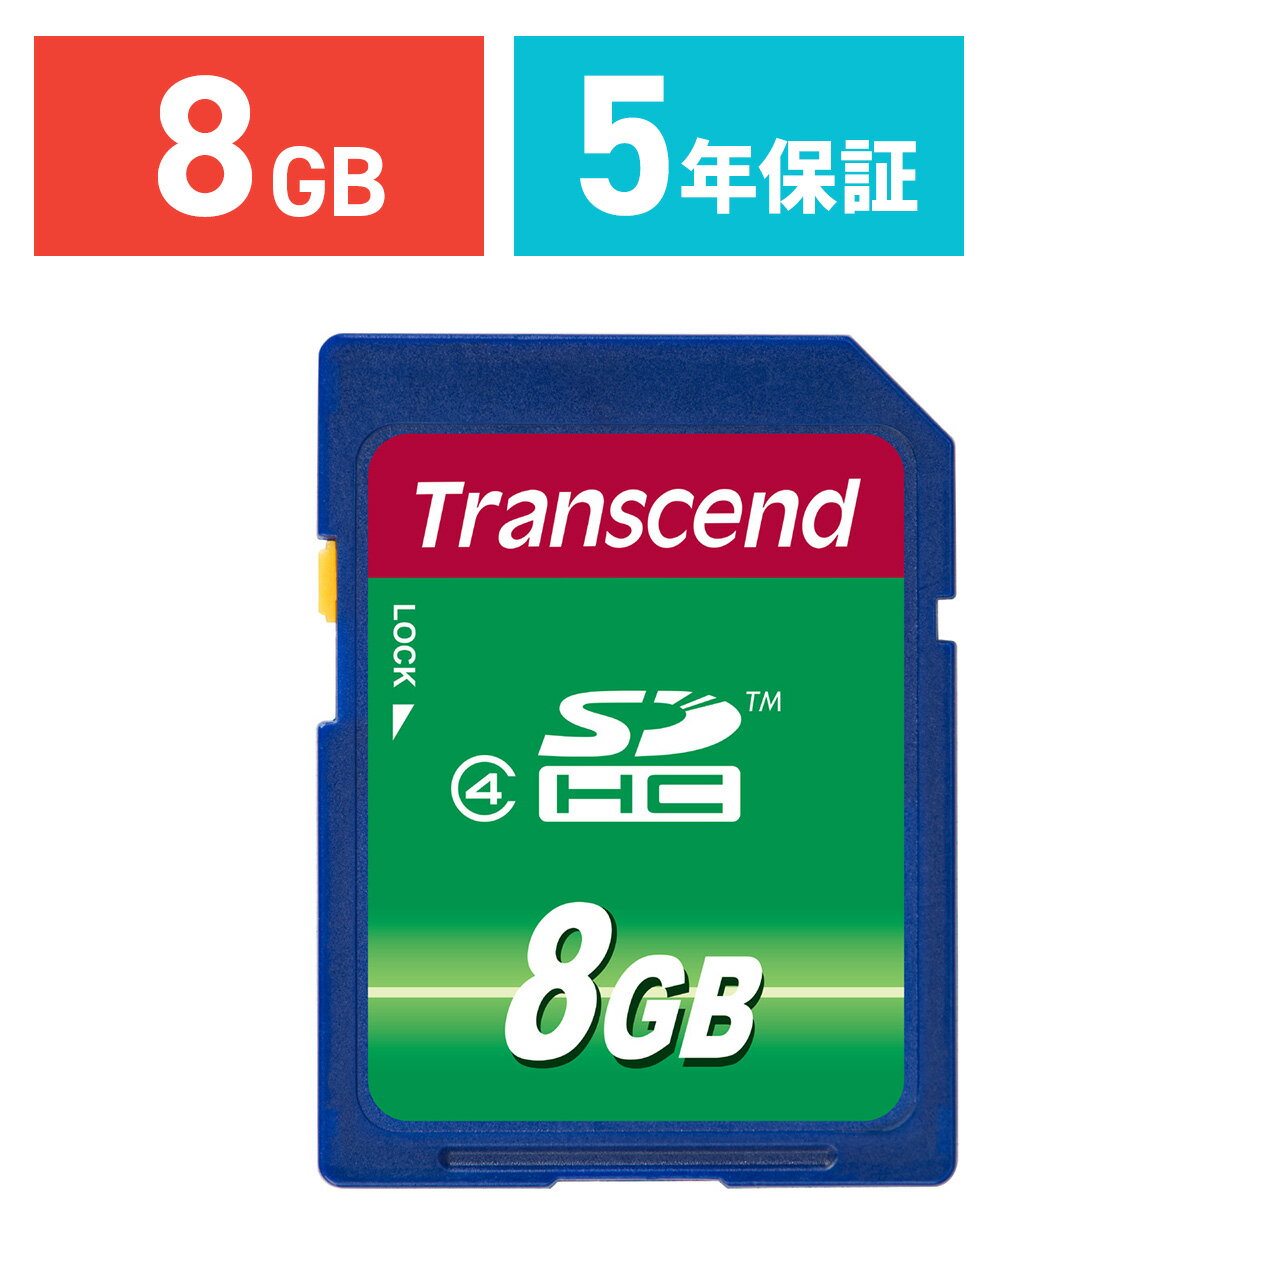 y5/15II100|CgҌ zTranscend SDJ[h 8GB Class4 SDHC 5Nۏ [J[h NX4 w 